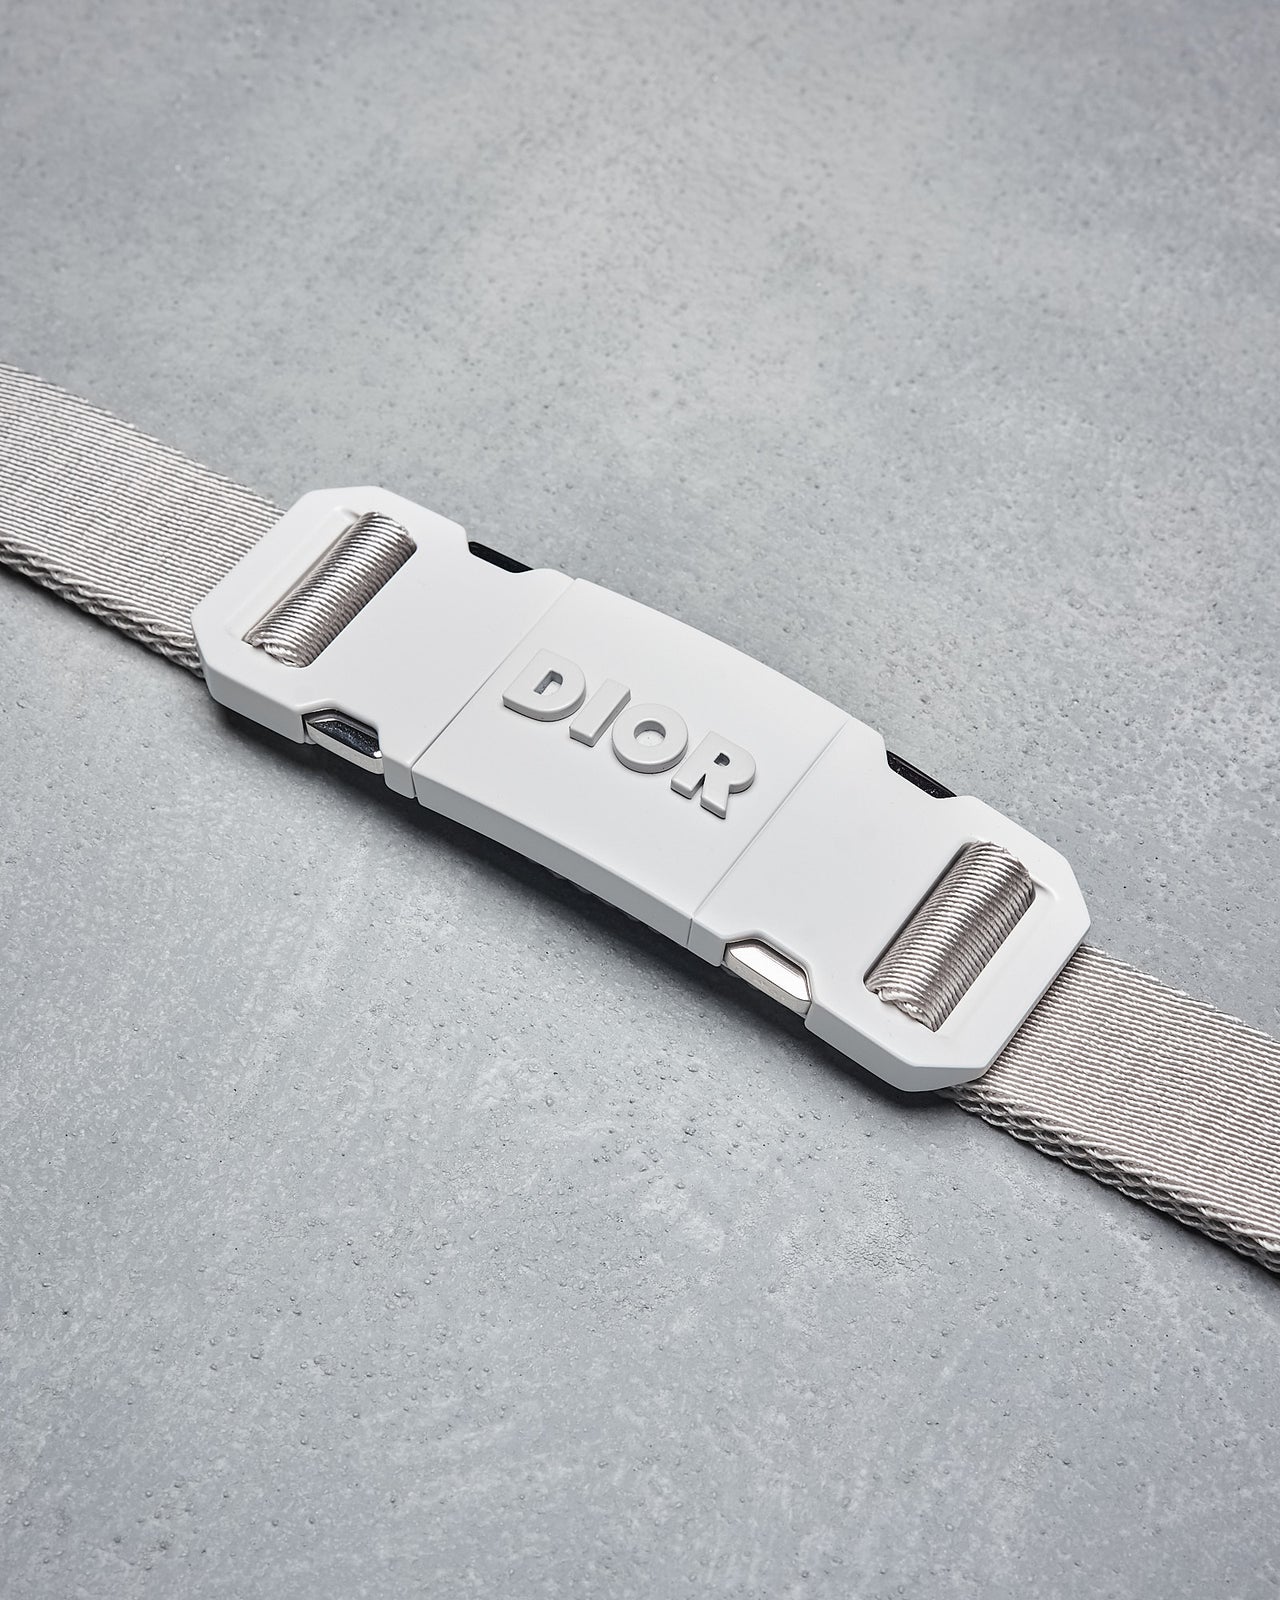 Dior SS 2020 Two-Way nylon buckle belt